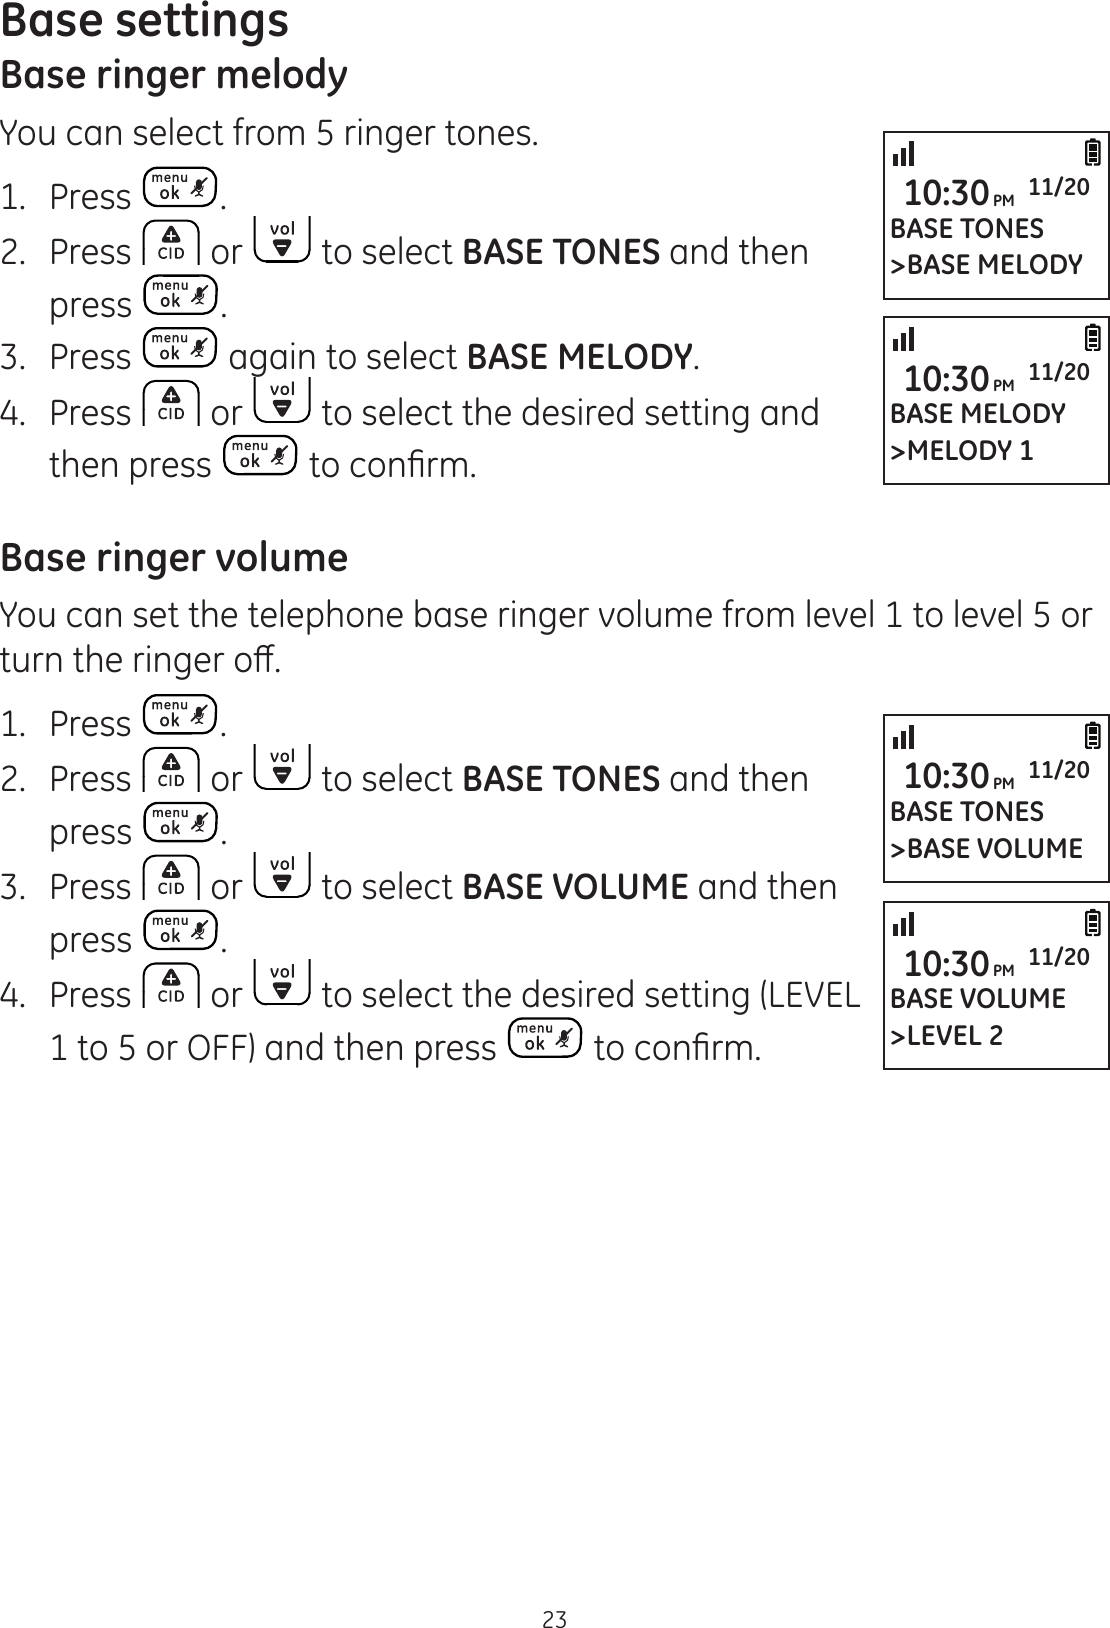 23Base settingsBase ringer melodyYou can select from 5 ringer tones.1.  Press .2.  Press   or   to select BASE TONES and then press  .3.  Press   again to select BASE MELODY.4.  Press   or   to select the desired setting and then press  WRFRQ¿UPBase ringer volumeYou can set the telephone base ringer volume from level 1 to level 5 or WXUQWKHULQJHURȺ1.  Press  .2.  Press   or   to select BASE TONES and then press  .3.  Press   or   to select BASE VOLUME and then press  .4.  Press   or   to select the desired setting (LEVEL 1 to 5 or OFF) and then press  WRFRQ¿UPBASE VOLUME&gt;LEVEL 210:30PM 11/20BASE TONES&gt;BASE VOLUME10:30PM 11/20BASE TONES&gt;BASE MELODY10:30PM 11/20BASE MELODY&gt;MELODY 110:30PM 11/20